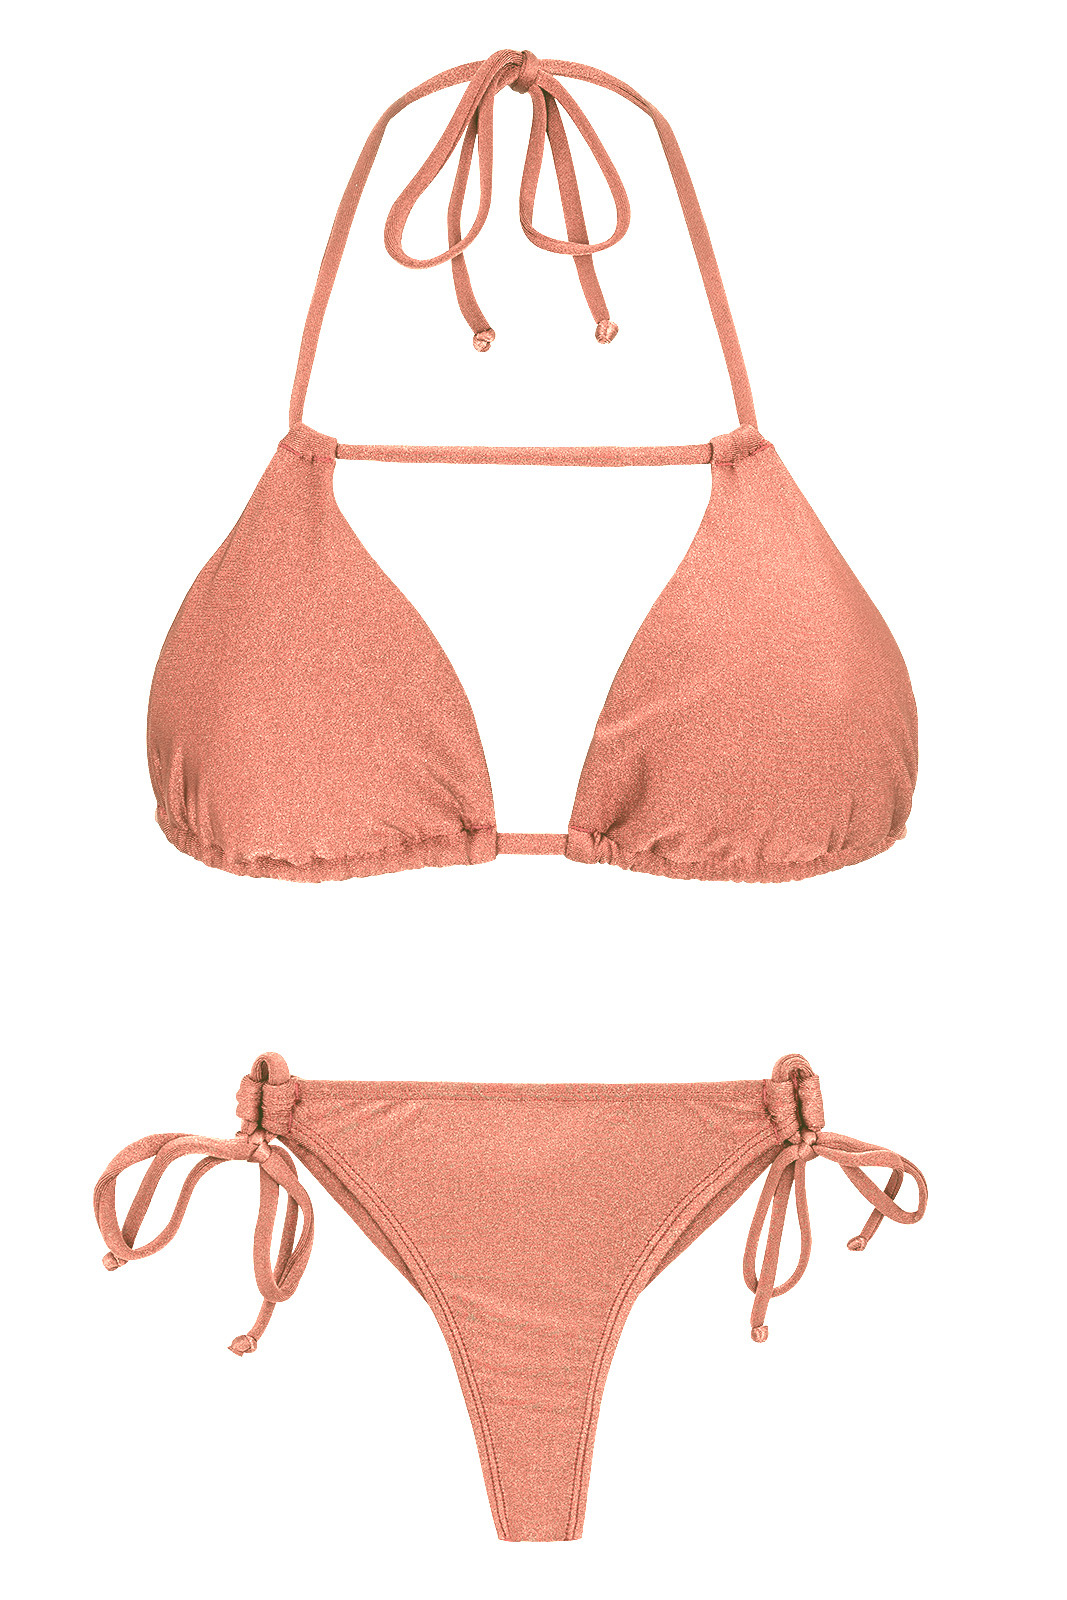 Two Piece Swimwear Peach Pink Side Tie String Bikini Rose Detail